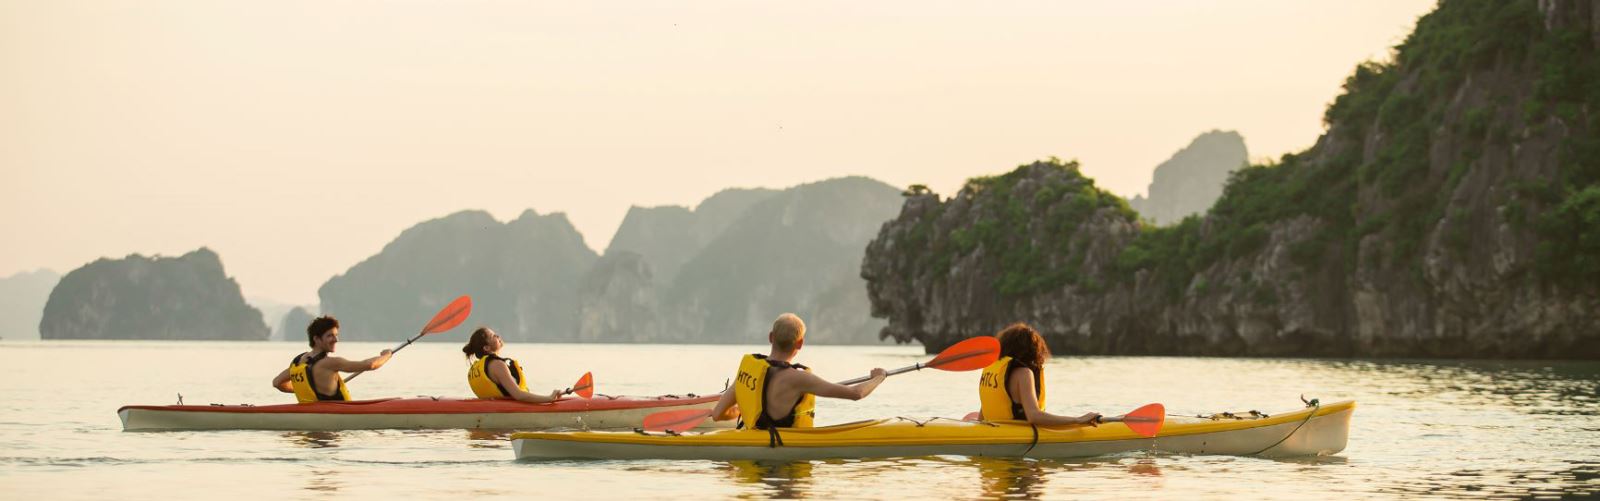 Vietnam Travel | Vietnam Tours |Vietnam Private tours | ilotustours